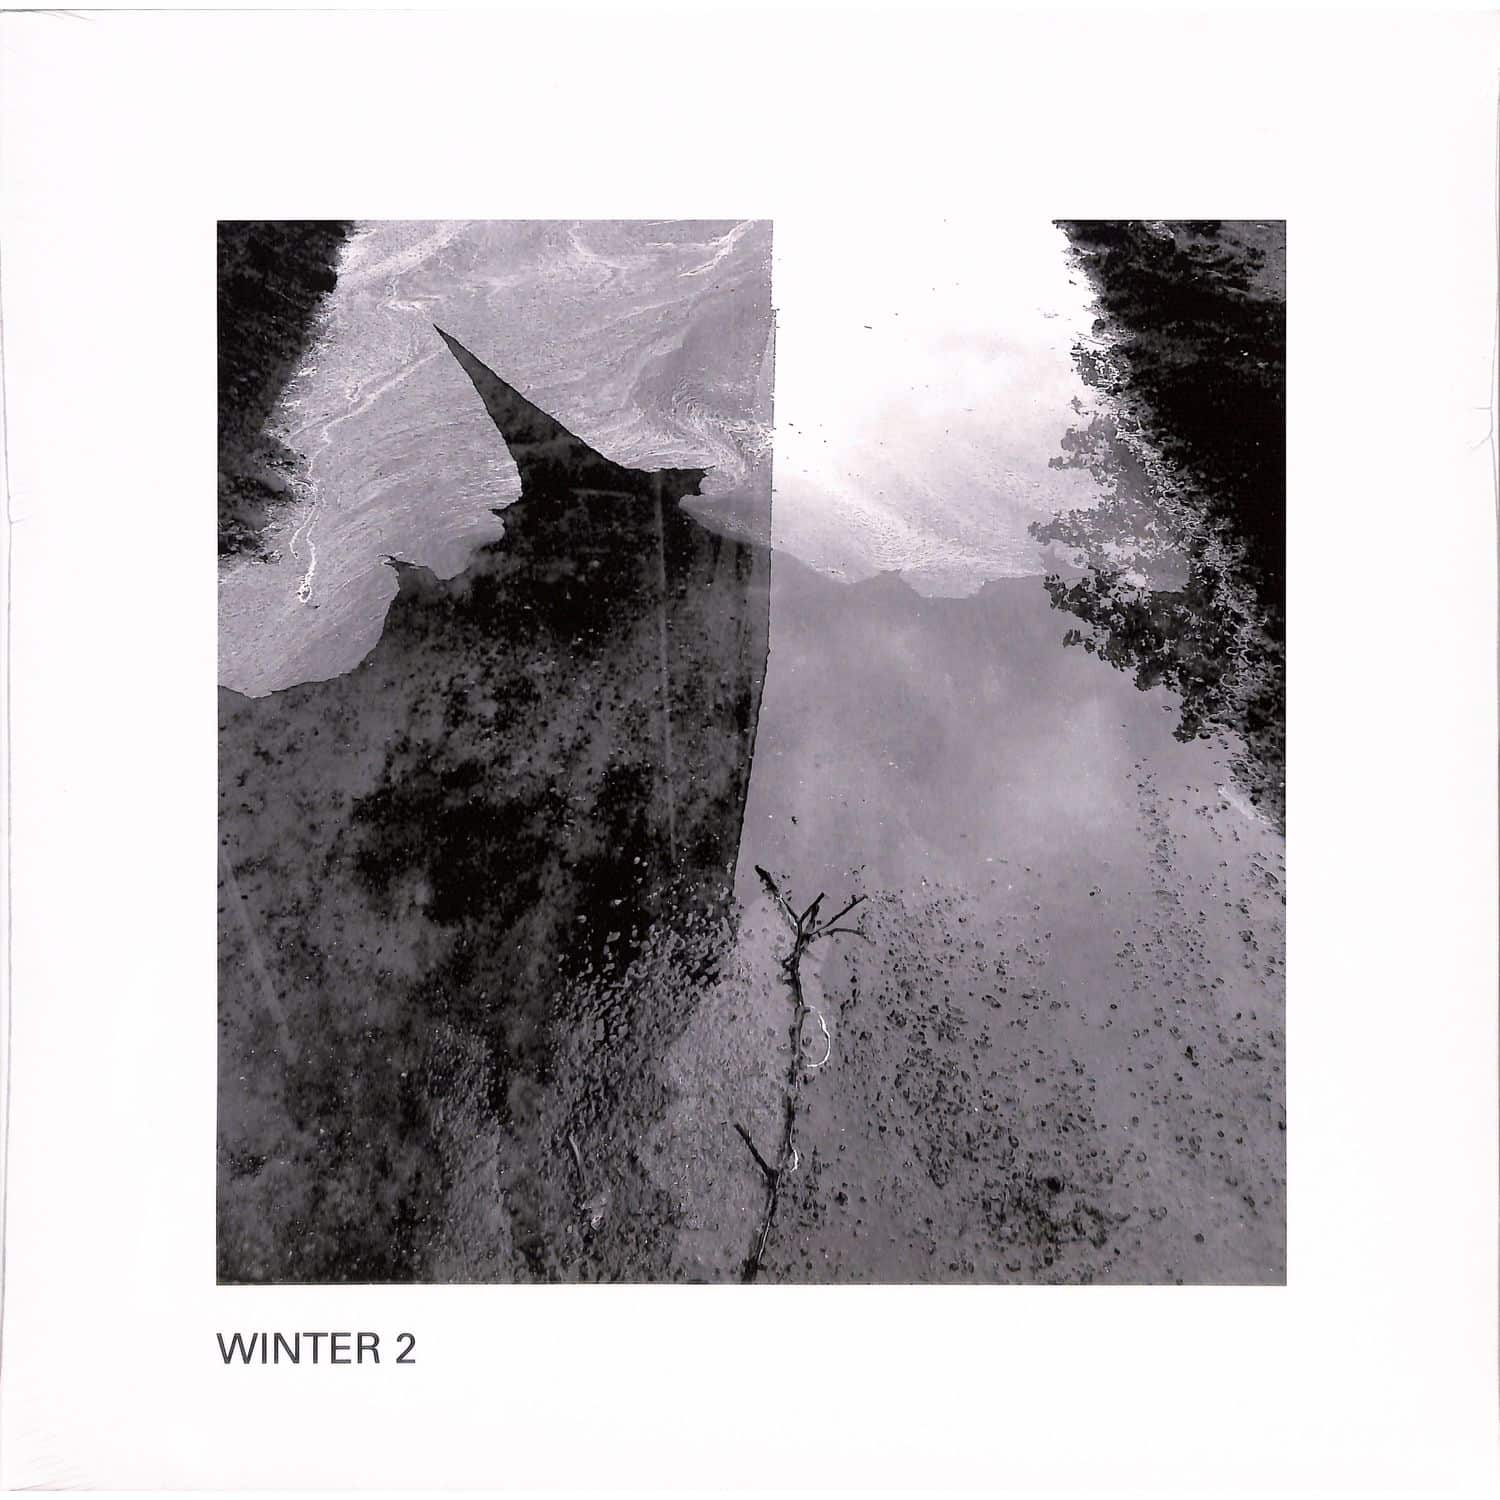 Winter 2 - WINTER 2 